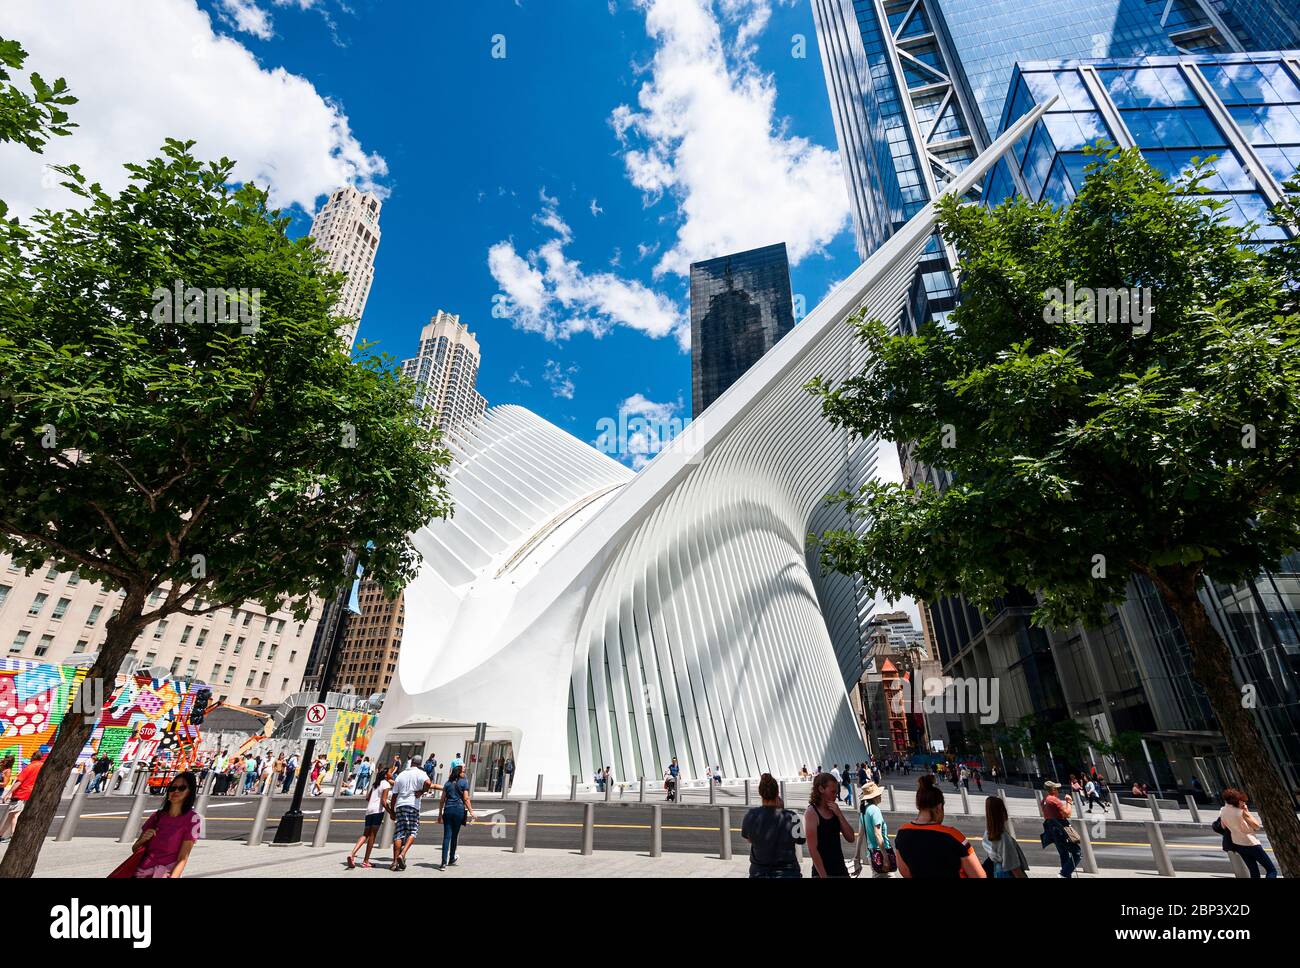 The Oculus Santiago Calatrava Architecture Oculus New York City Stock Photo